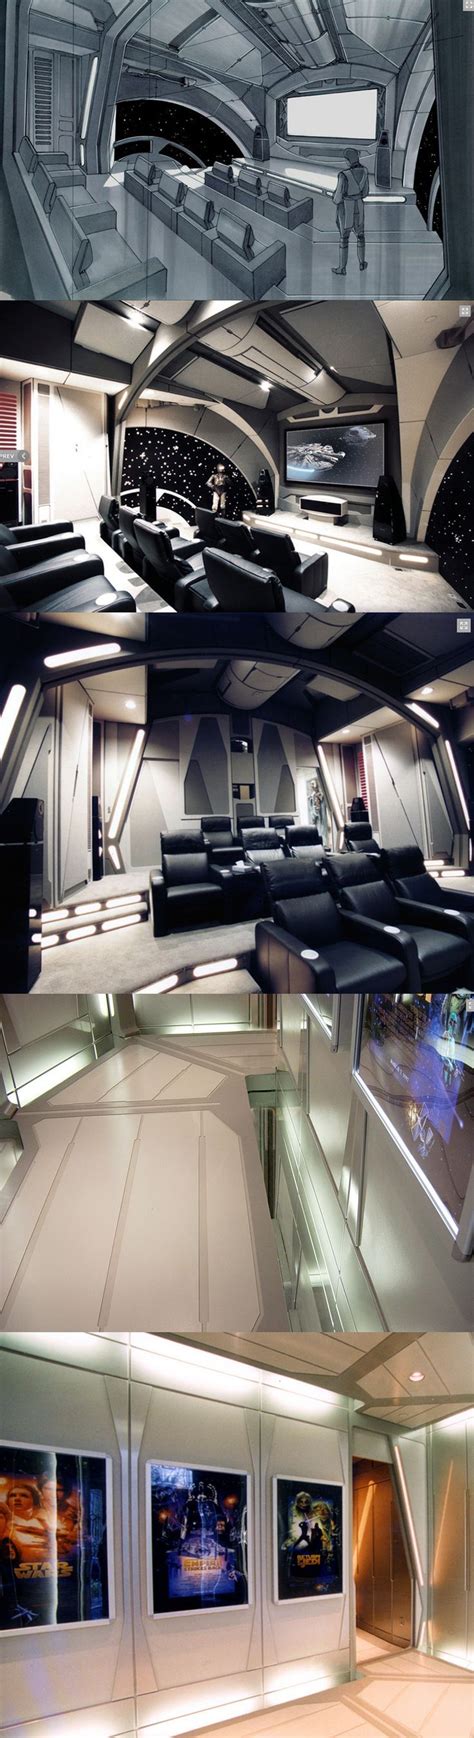 Home Cinemas Star Wars Room Home Theater